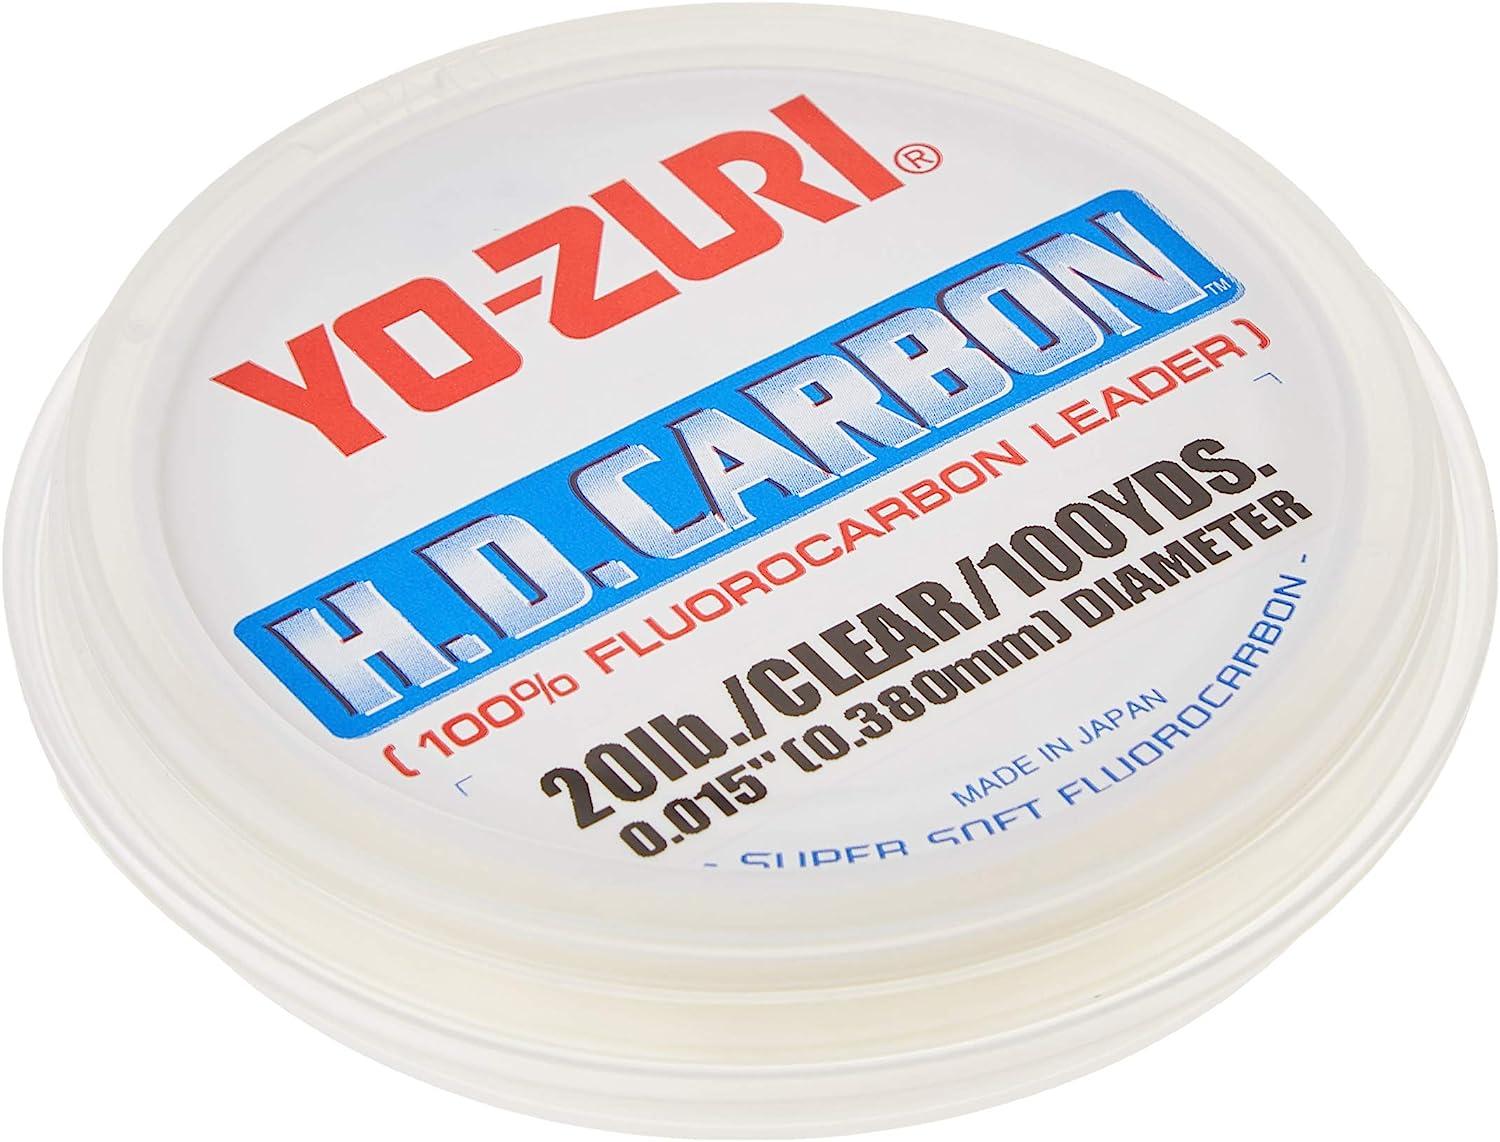 Yo-Zuri HD200LB-CL HD Fluorocarbon Leader